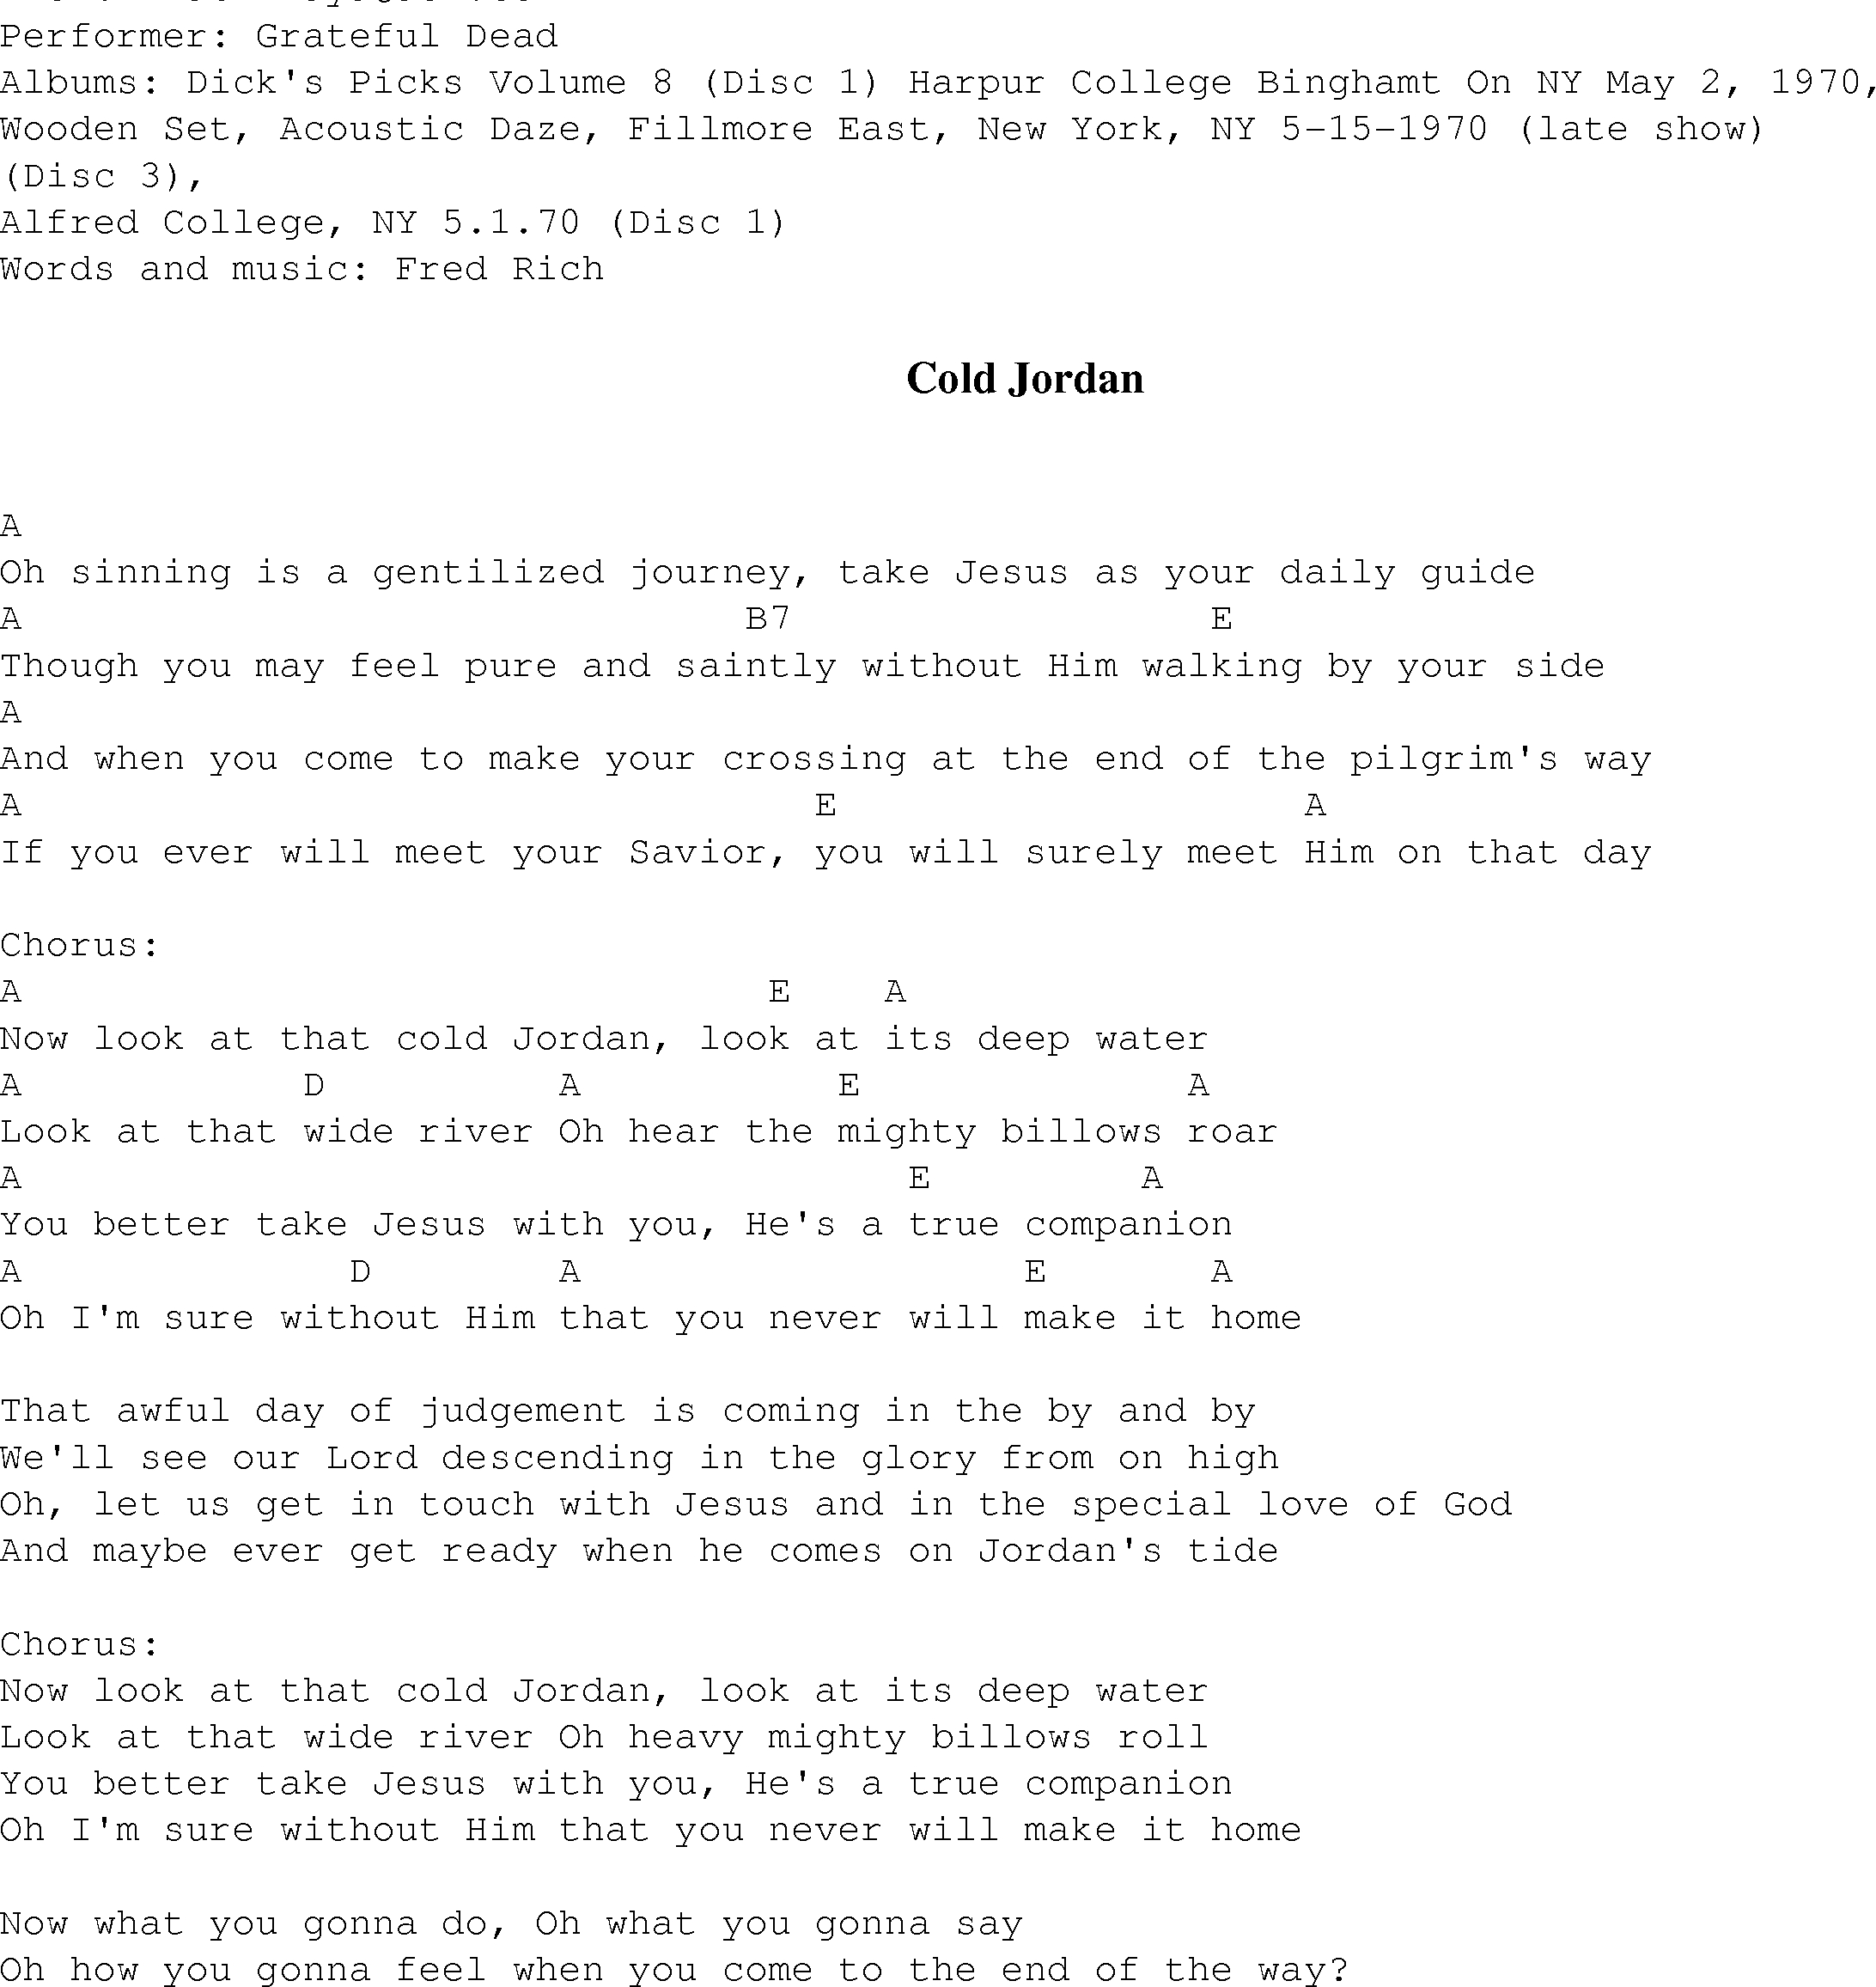 Cold Water Chords Cold Jordan Christian Gospel Song Lyrics And Chords